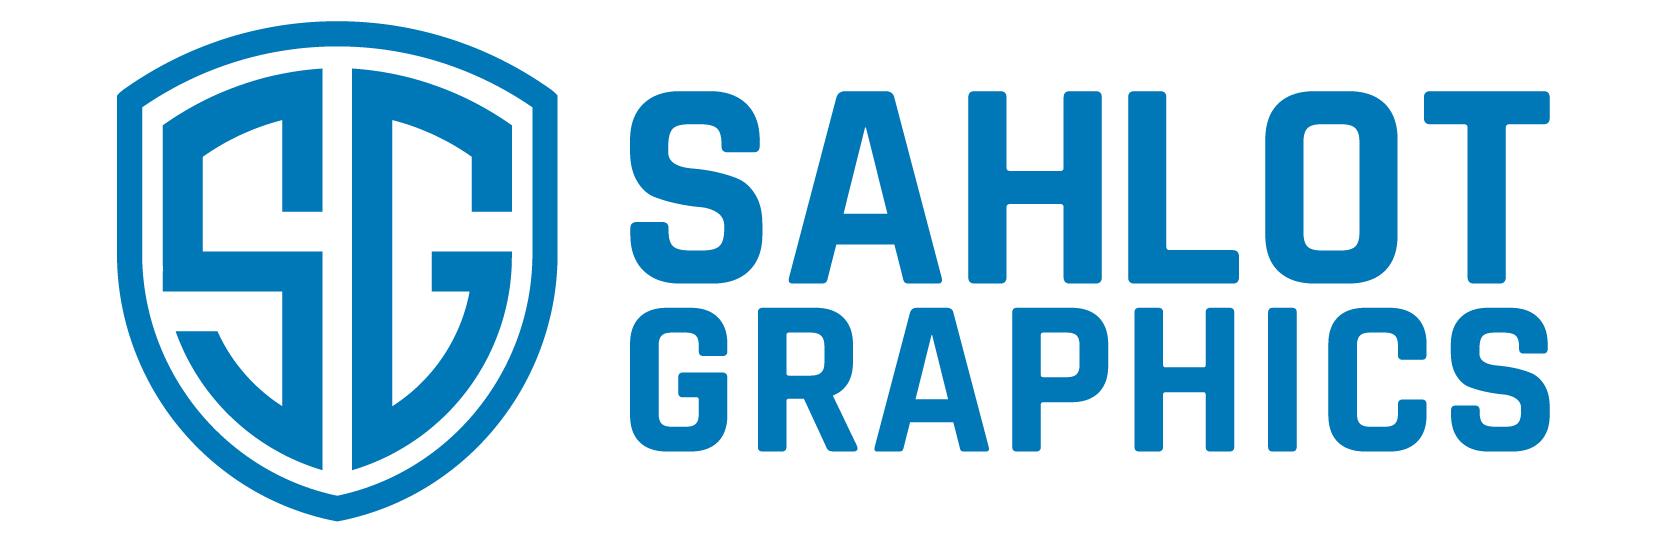 sahlot graphics llp logo